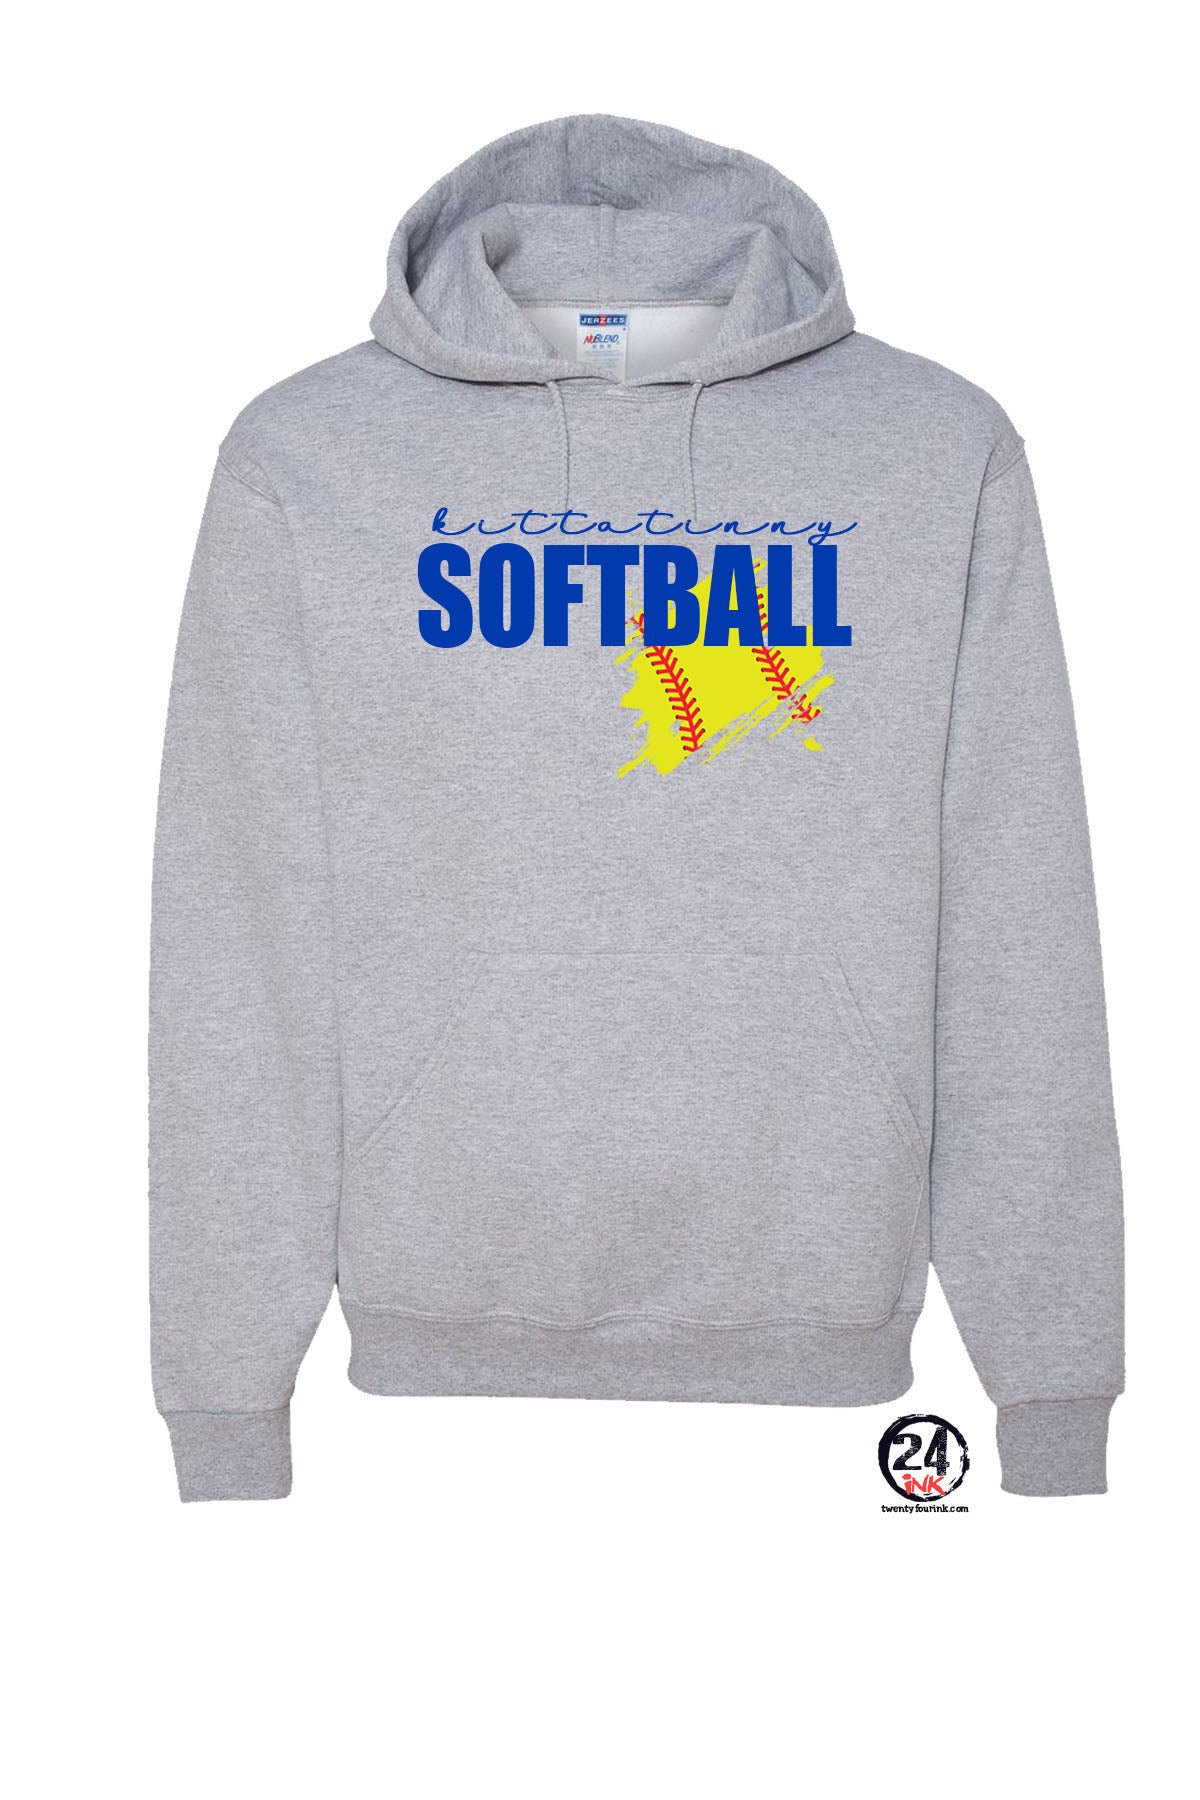 Kittatinny Softball Hooded Sweatshirt